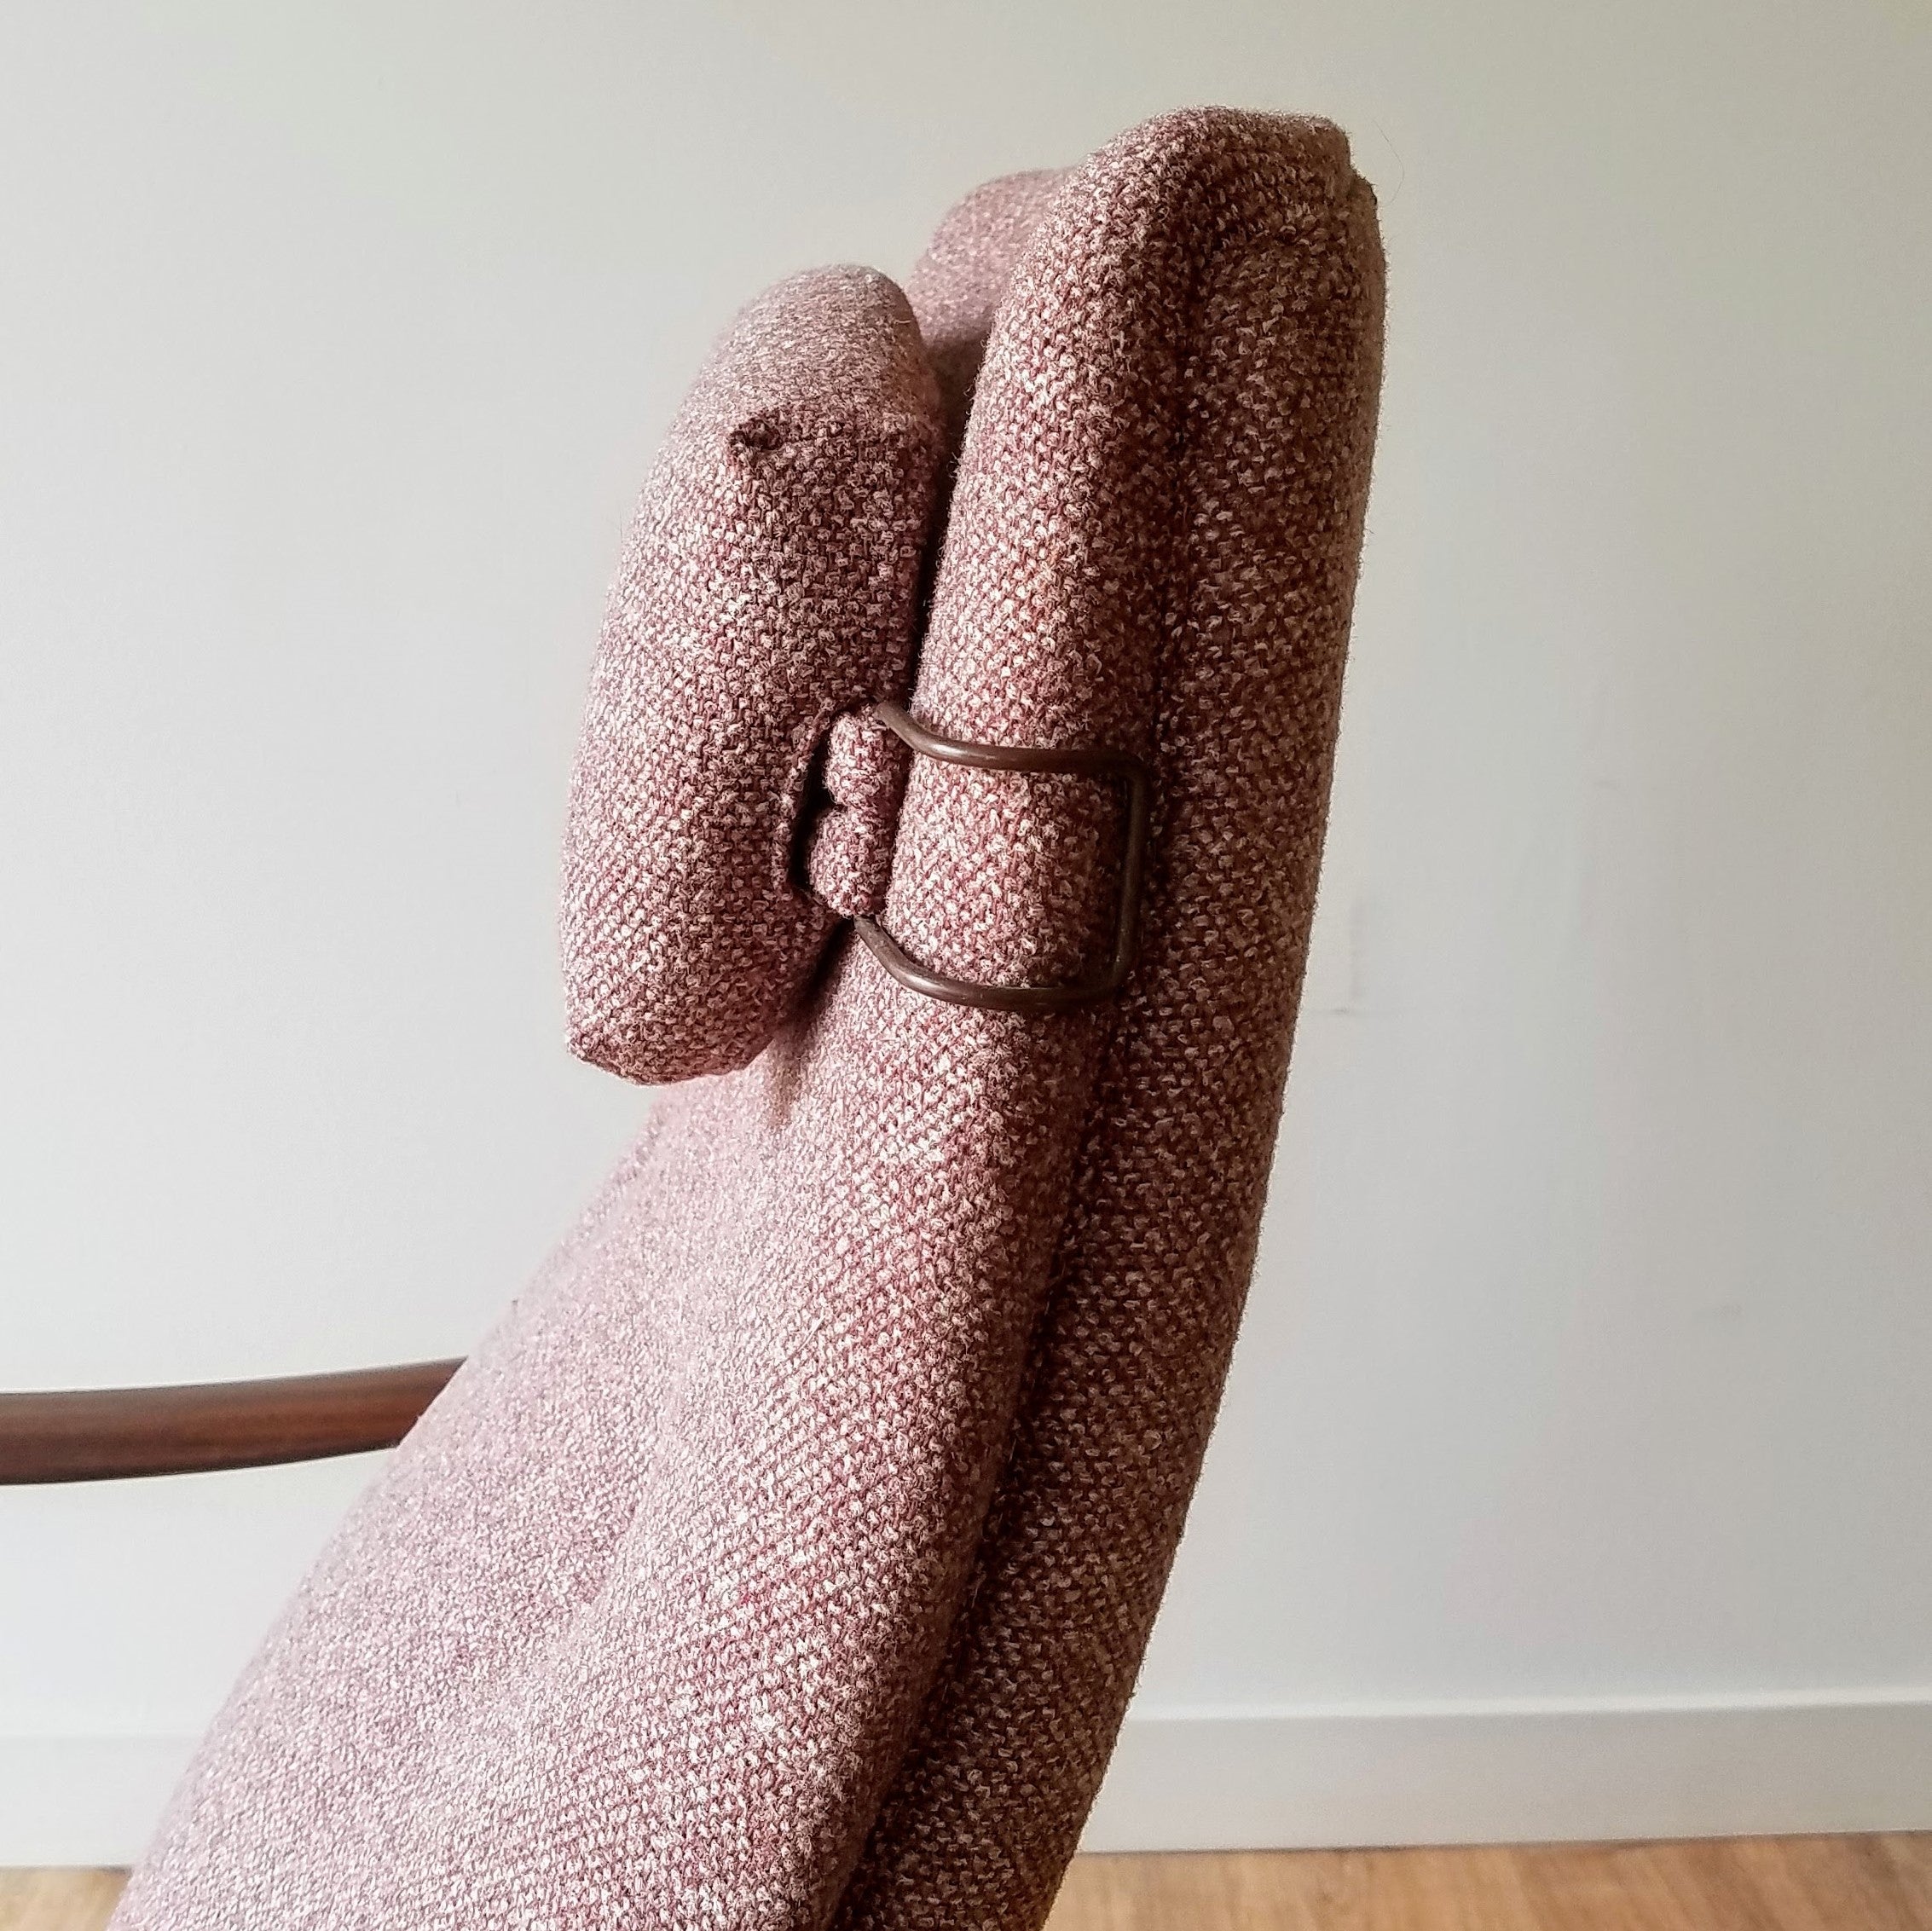 Westnofa Lounge Chair